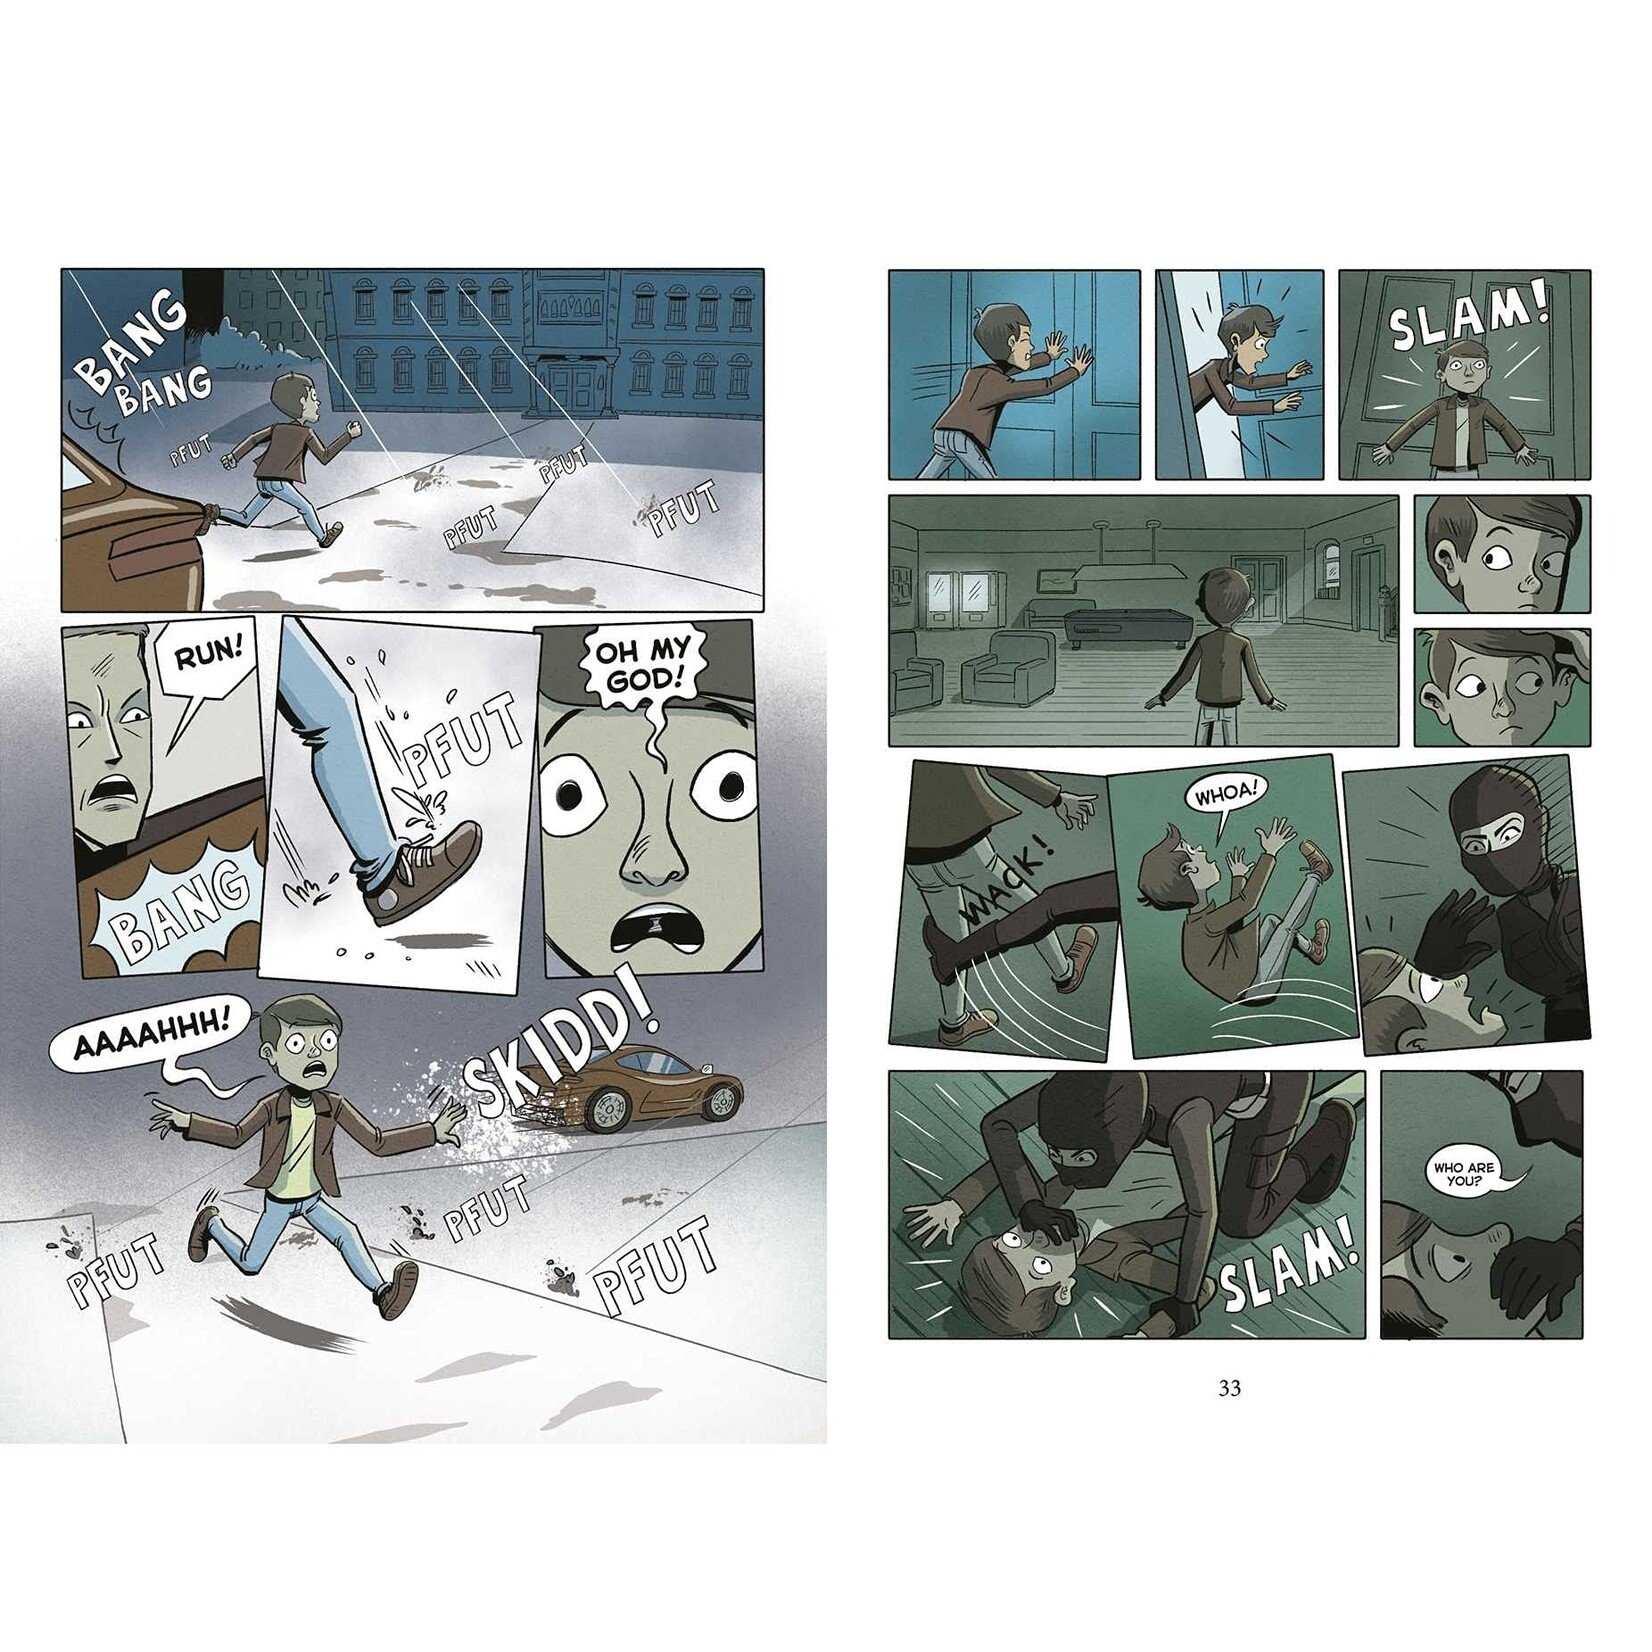 Spy School the Graphic Novel (#1)